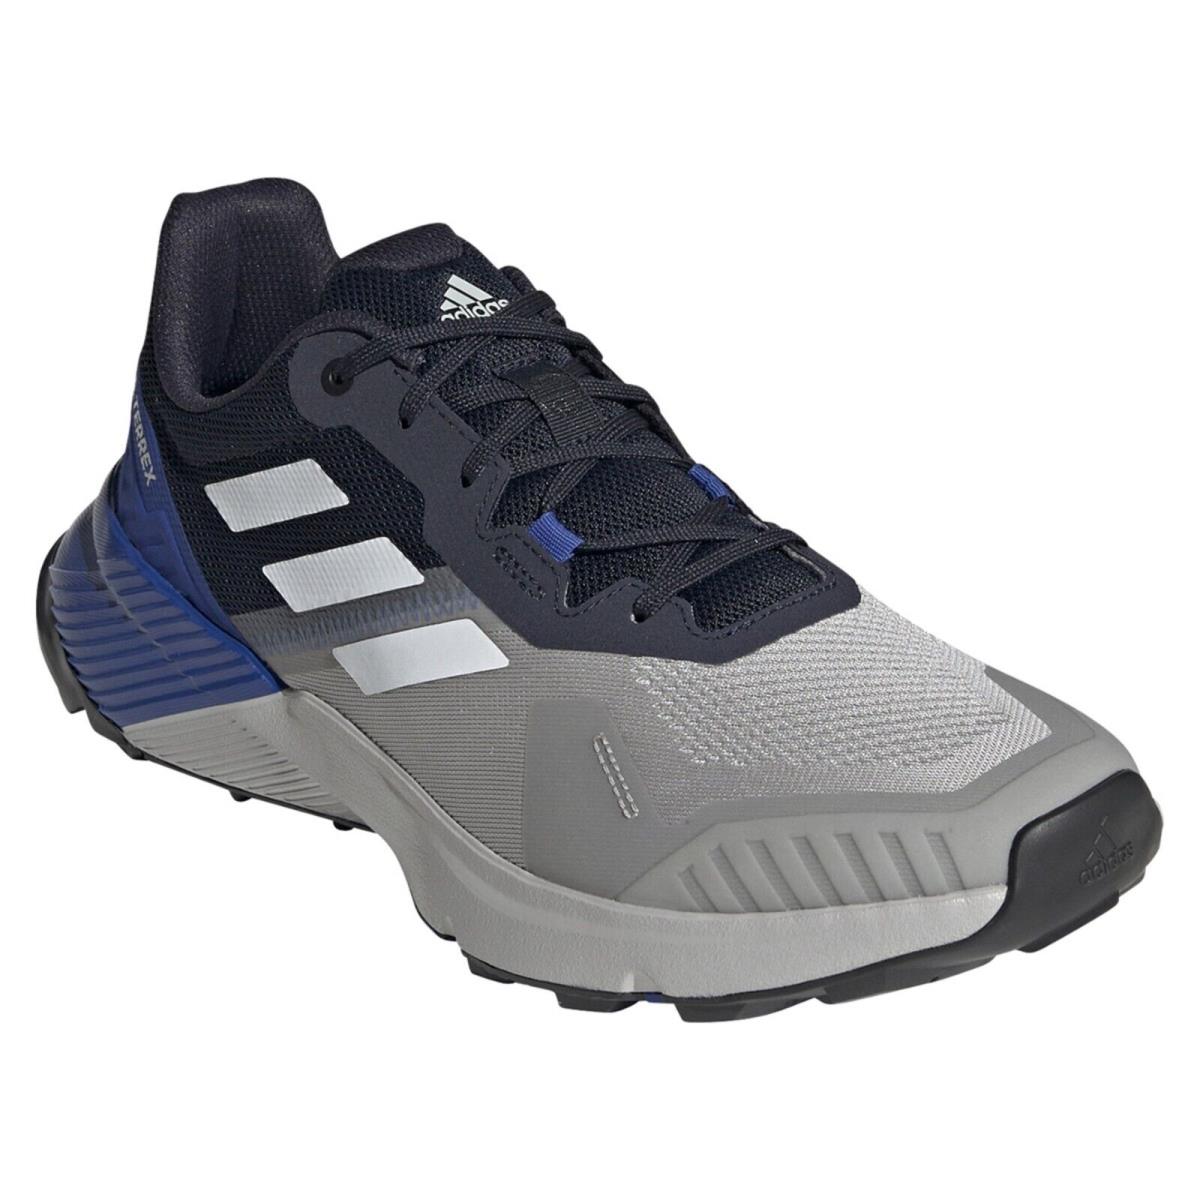 Adidas Men`s Outdoor Terrex Two Parley Trail Running Shoe Size 11.5 13 - Grey Two/Footwear White/Legend